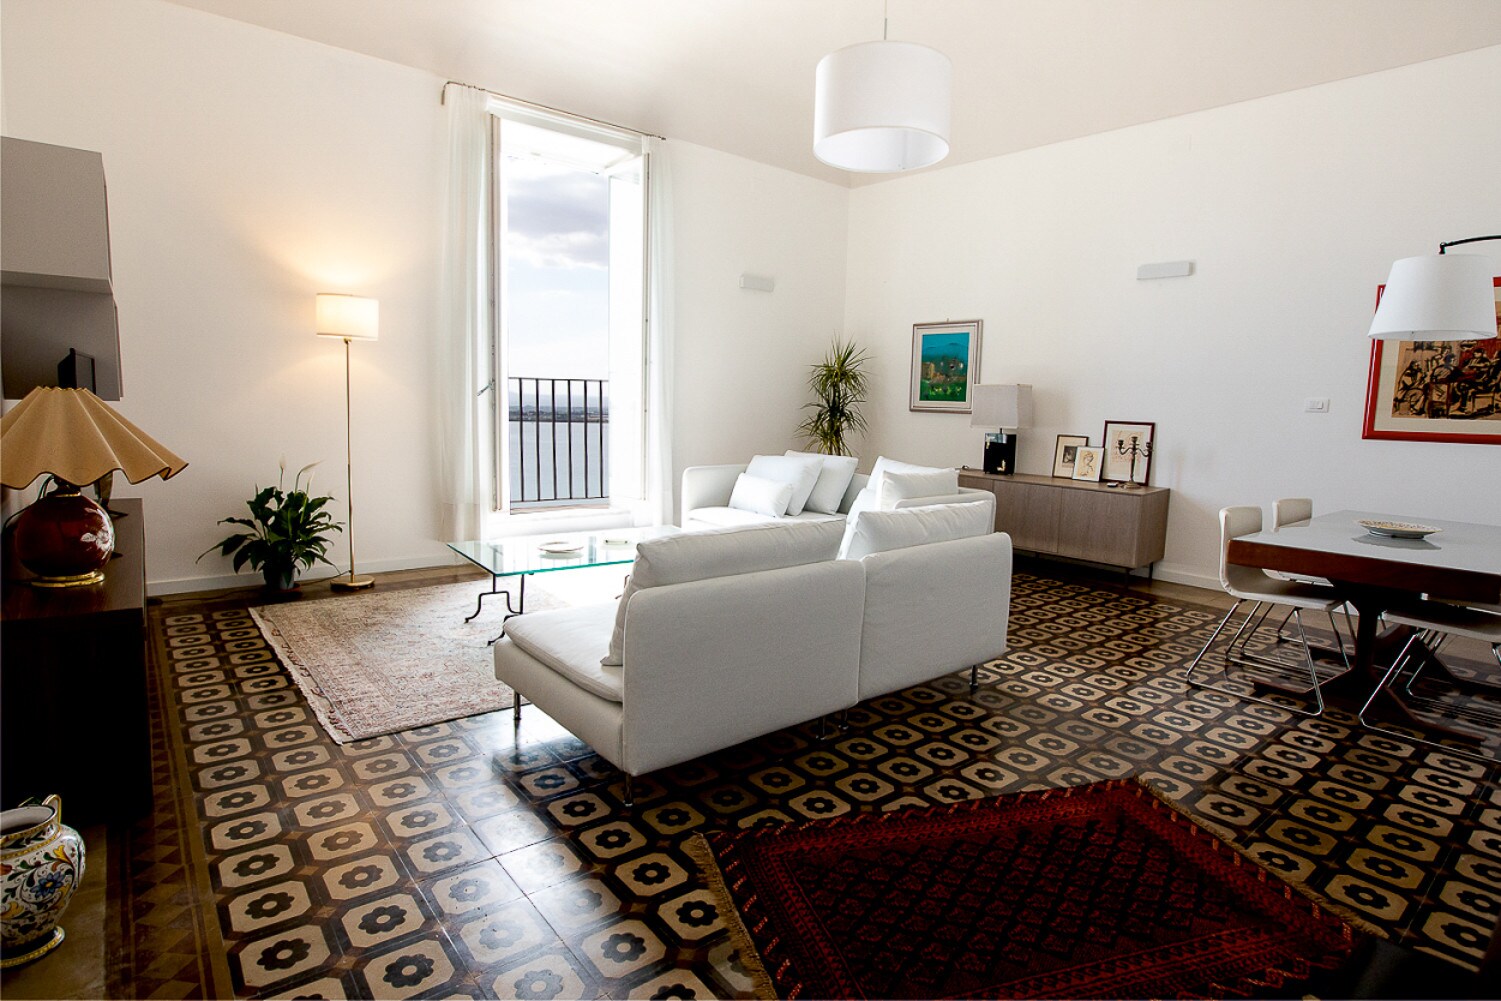 Property Image 2 - Seaview design apartment in Ortigia island